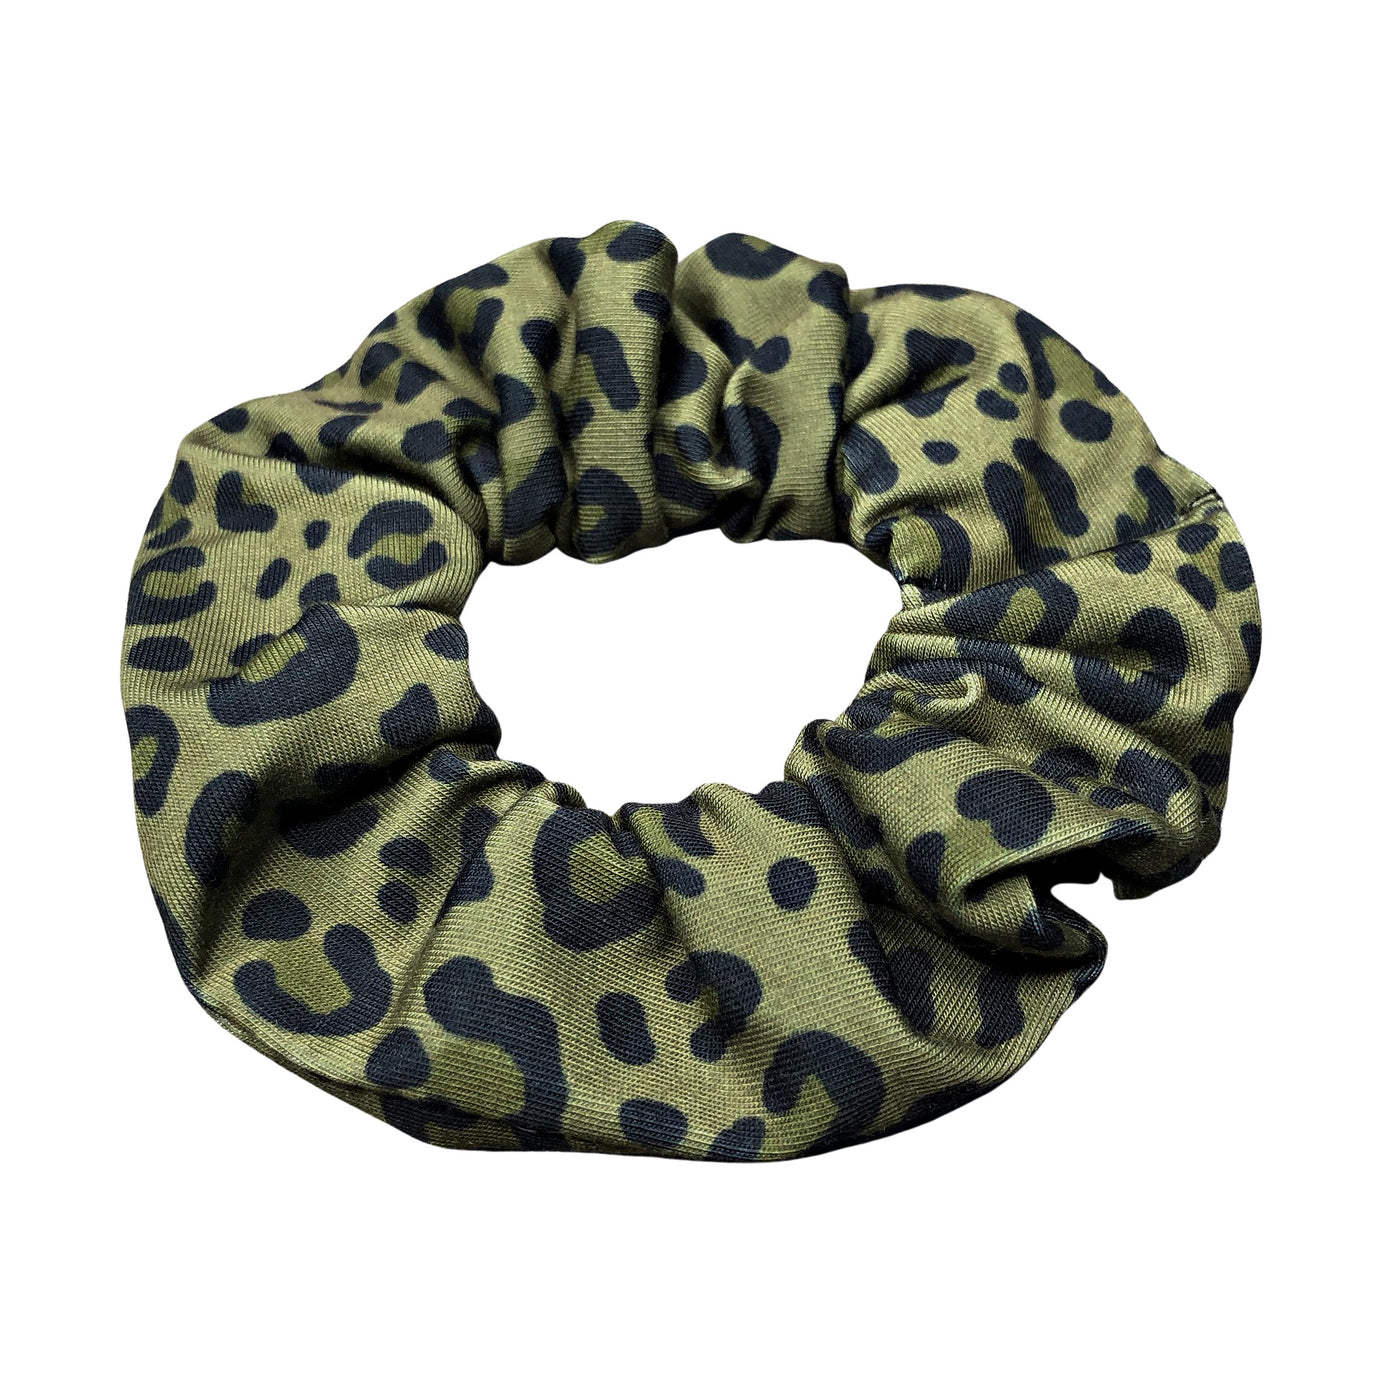 Olive Green and Black Leopard Scrunchie